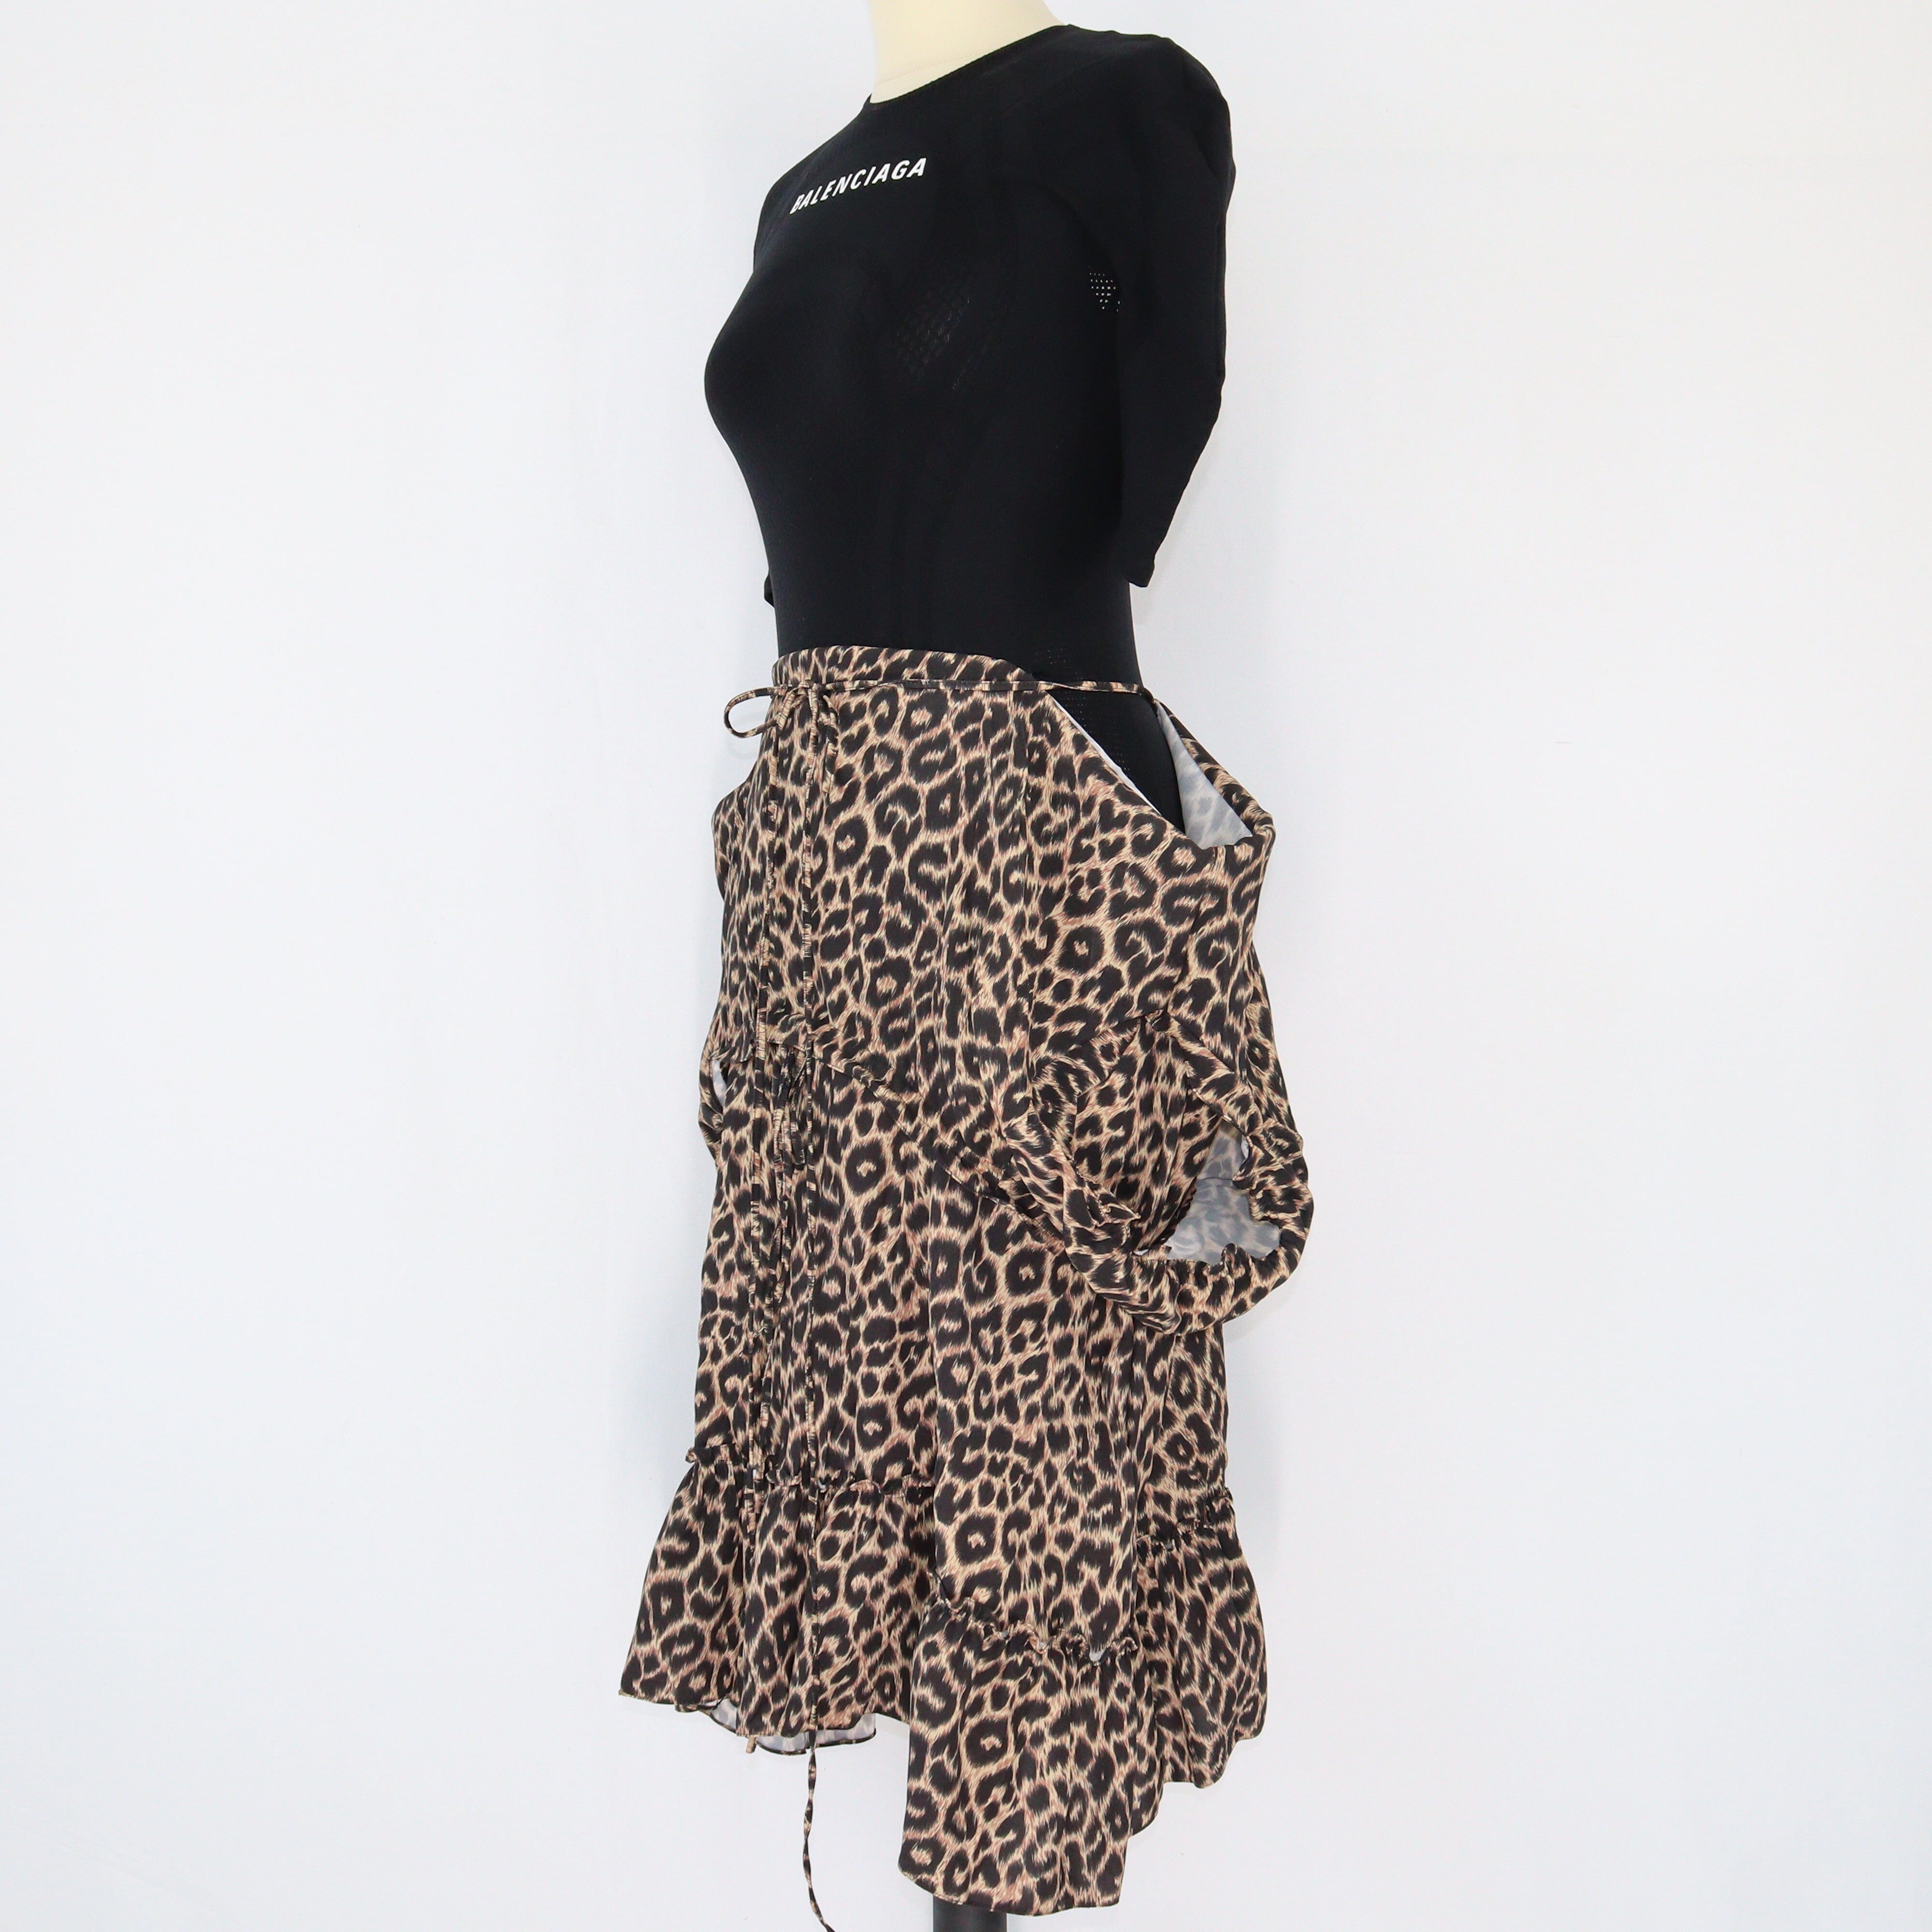 Black Leopard Print Spring Summer 2018 Dress Clothings Balenciaga 